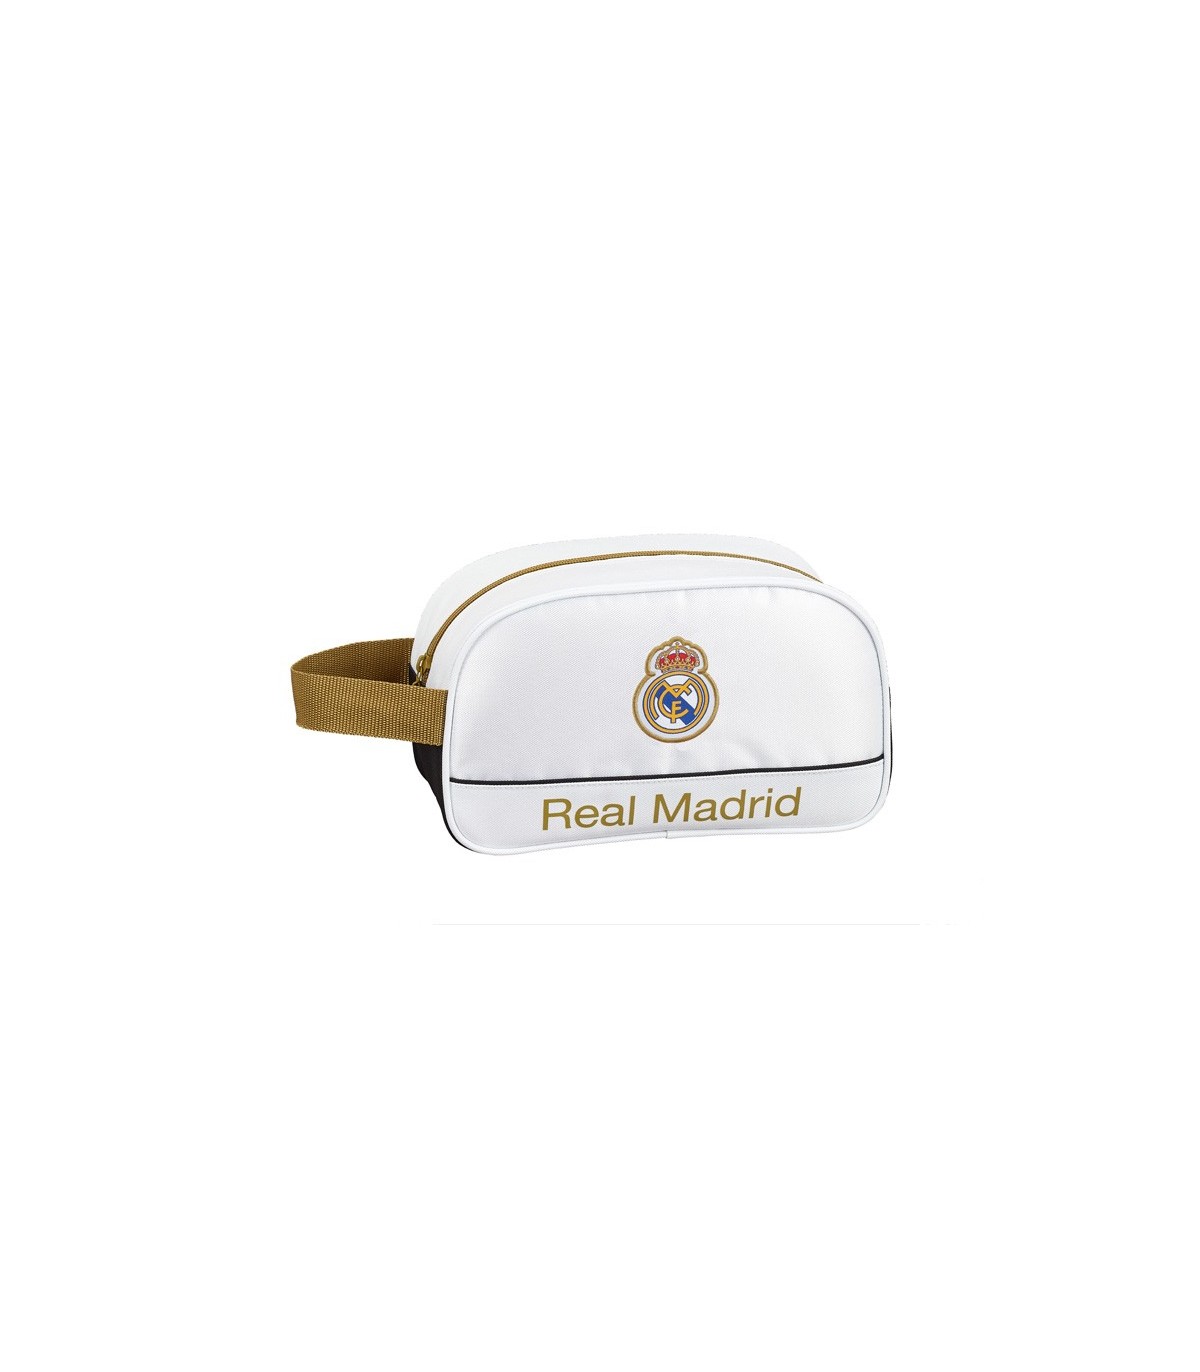 Neceser Real Madrid.Adaptable a carro 811954248, REAL MADRID SAFTA